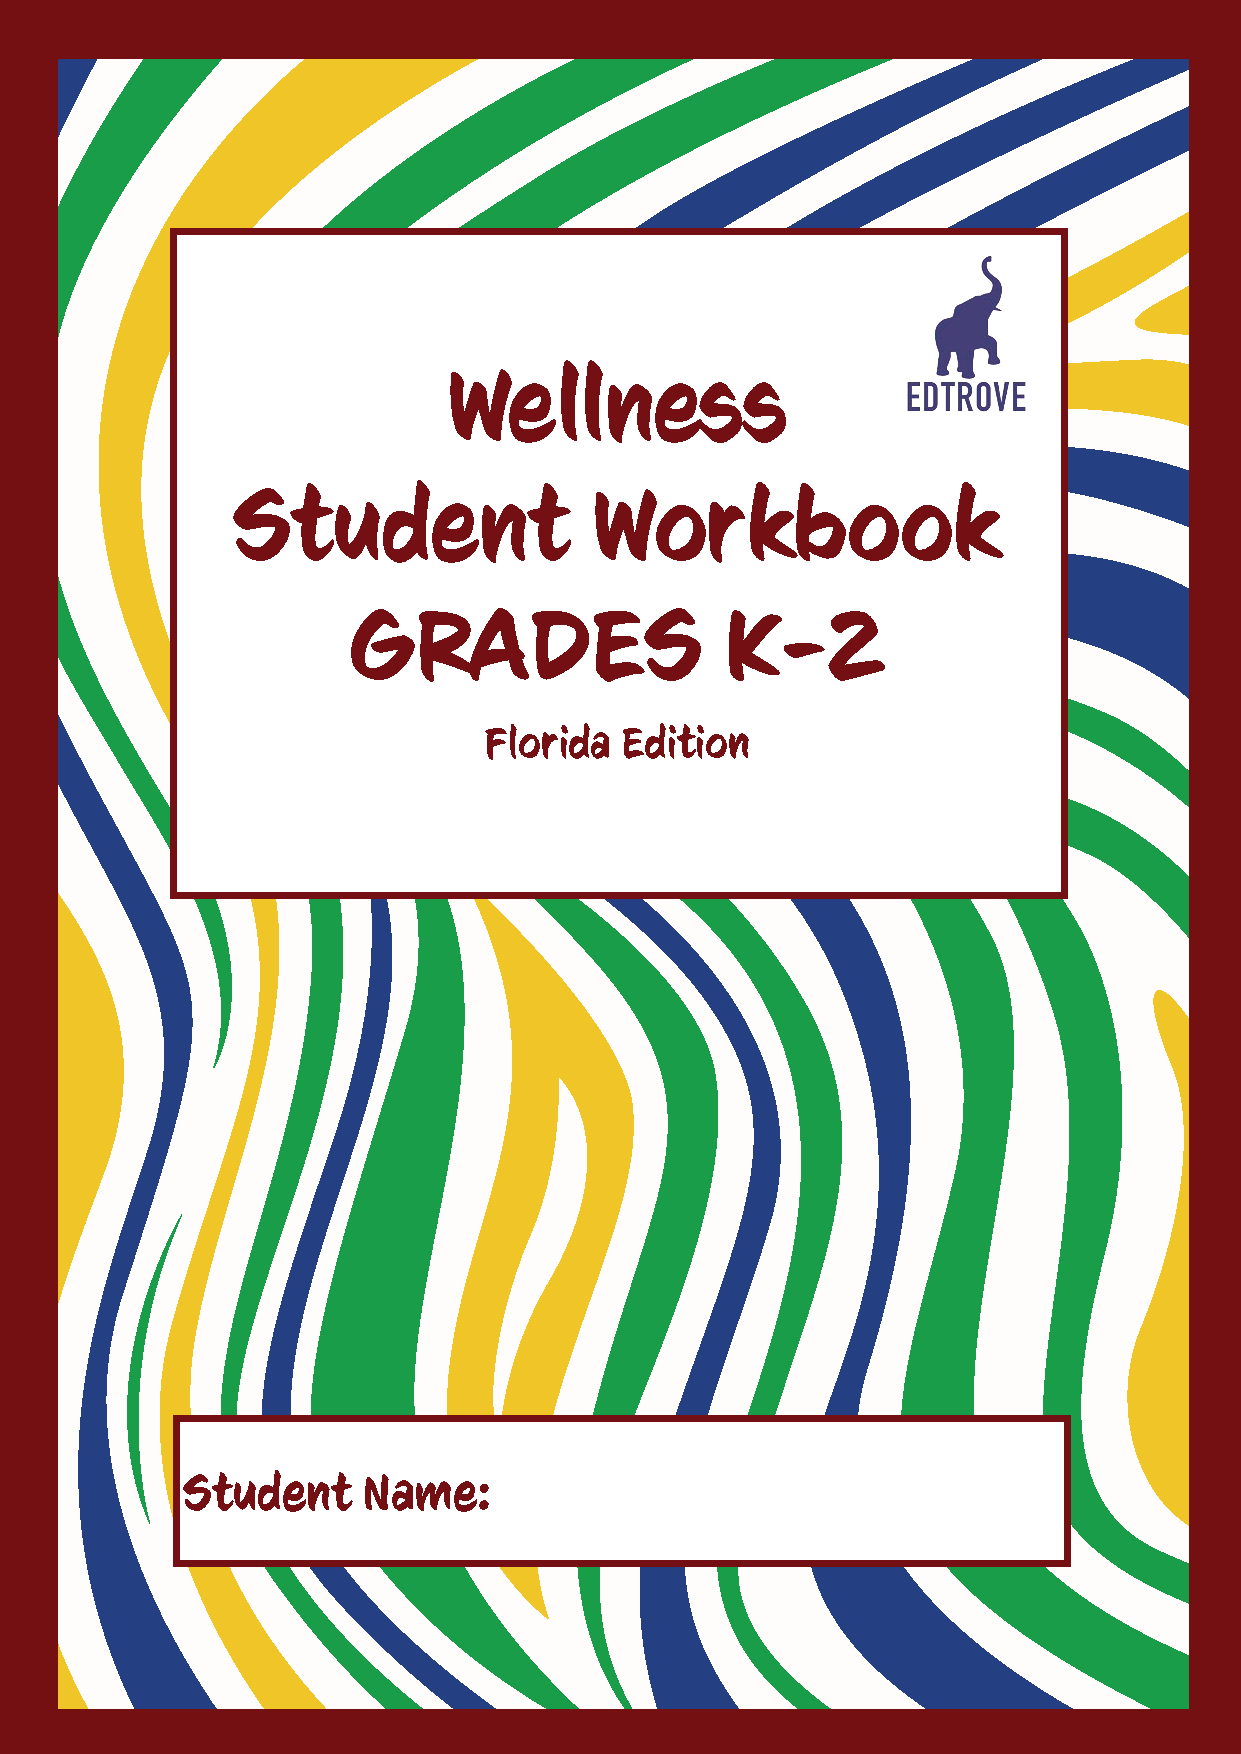 Wellness Student Workbook Grades K-2 (Florida edition)